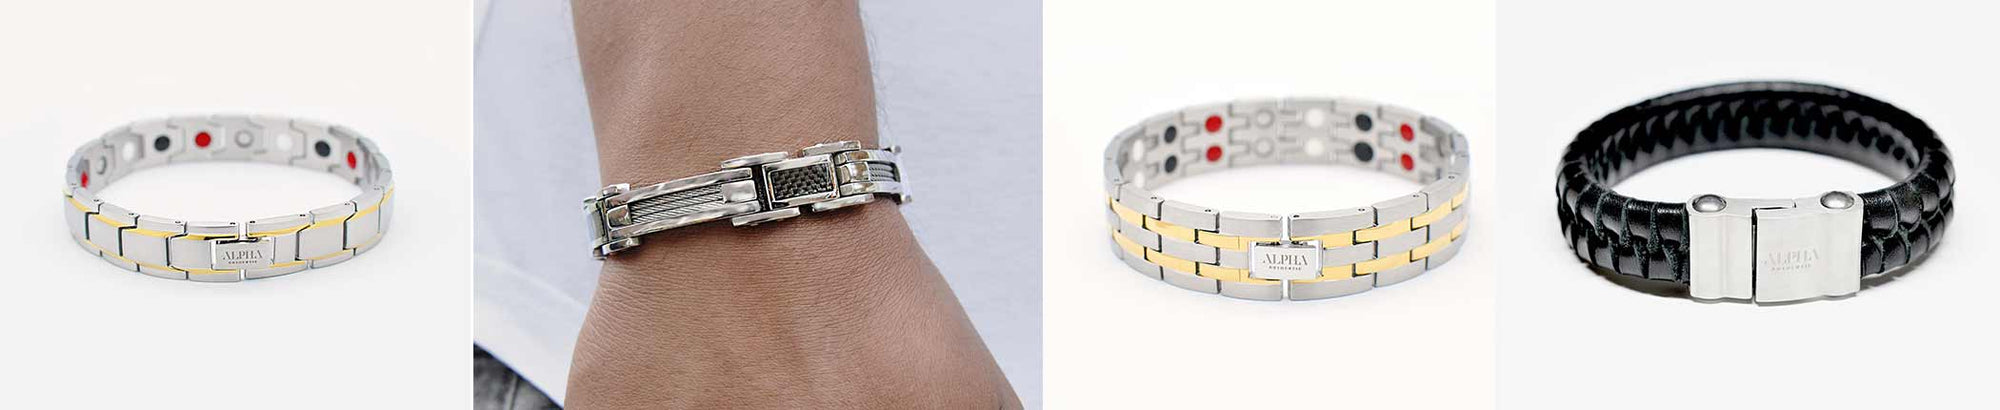 <font color=#000000>Accessories for men; stainless steel bracelets</font>